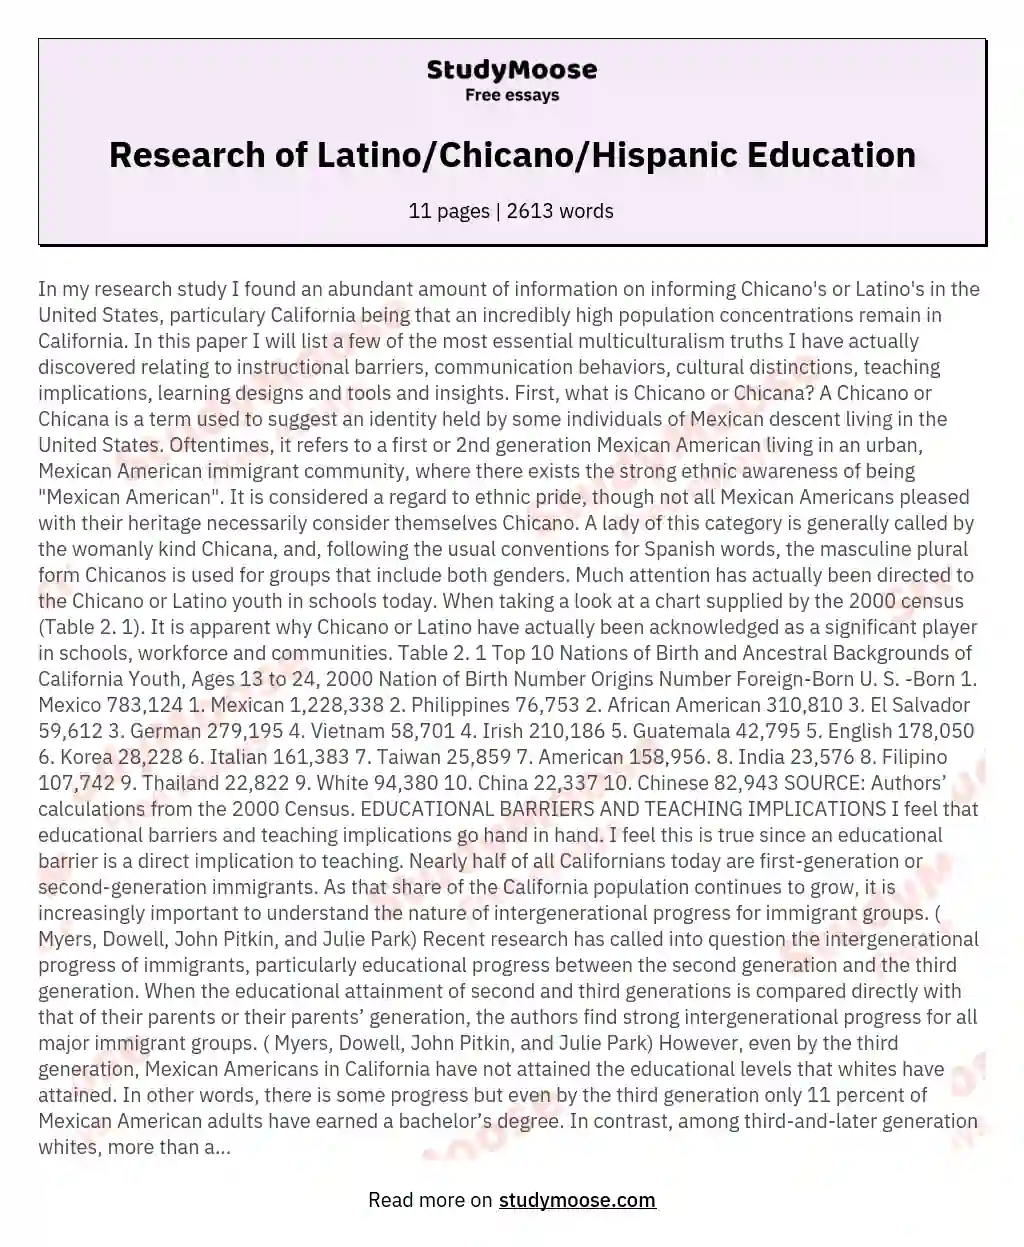 Research of Latino/Chicano/Hispanic Education